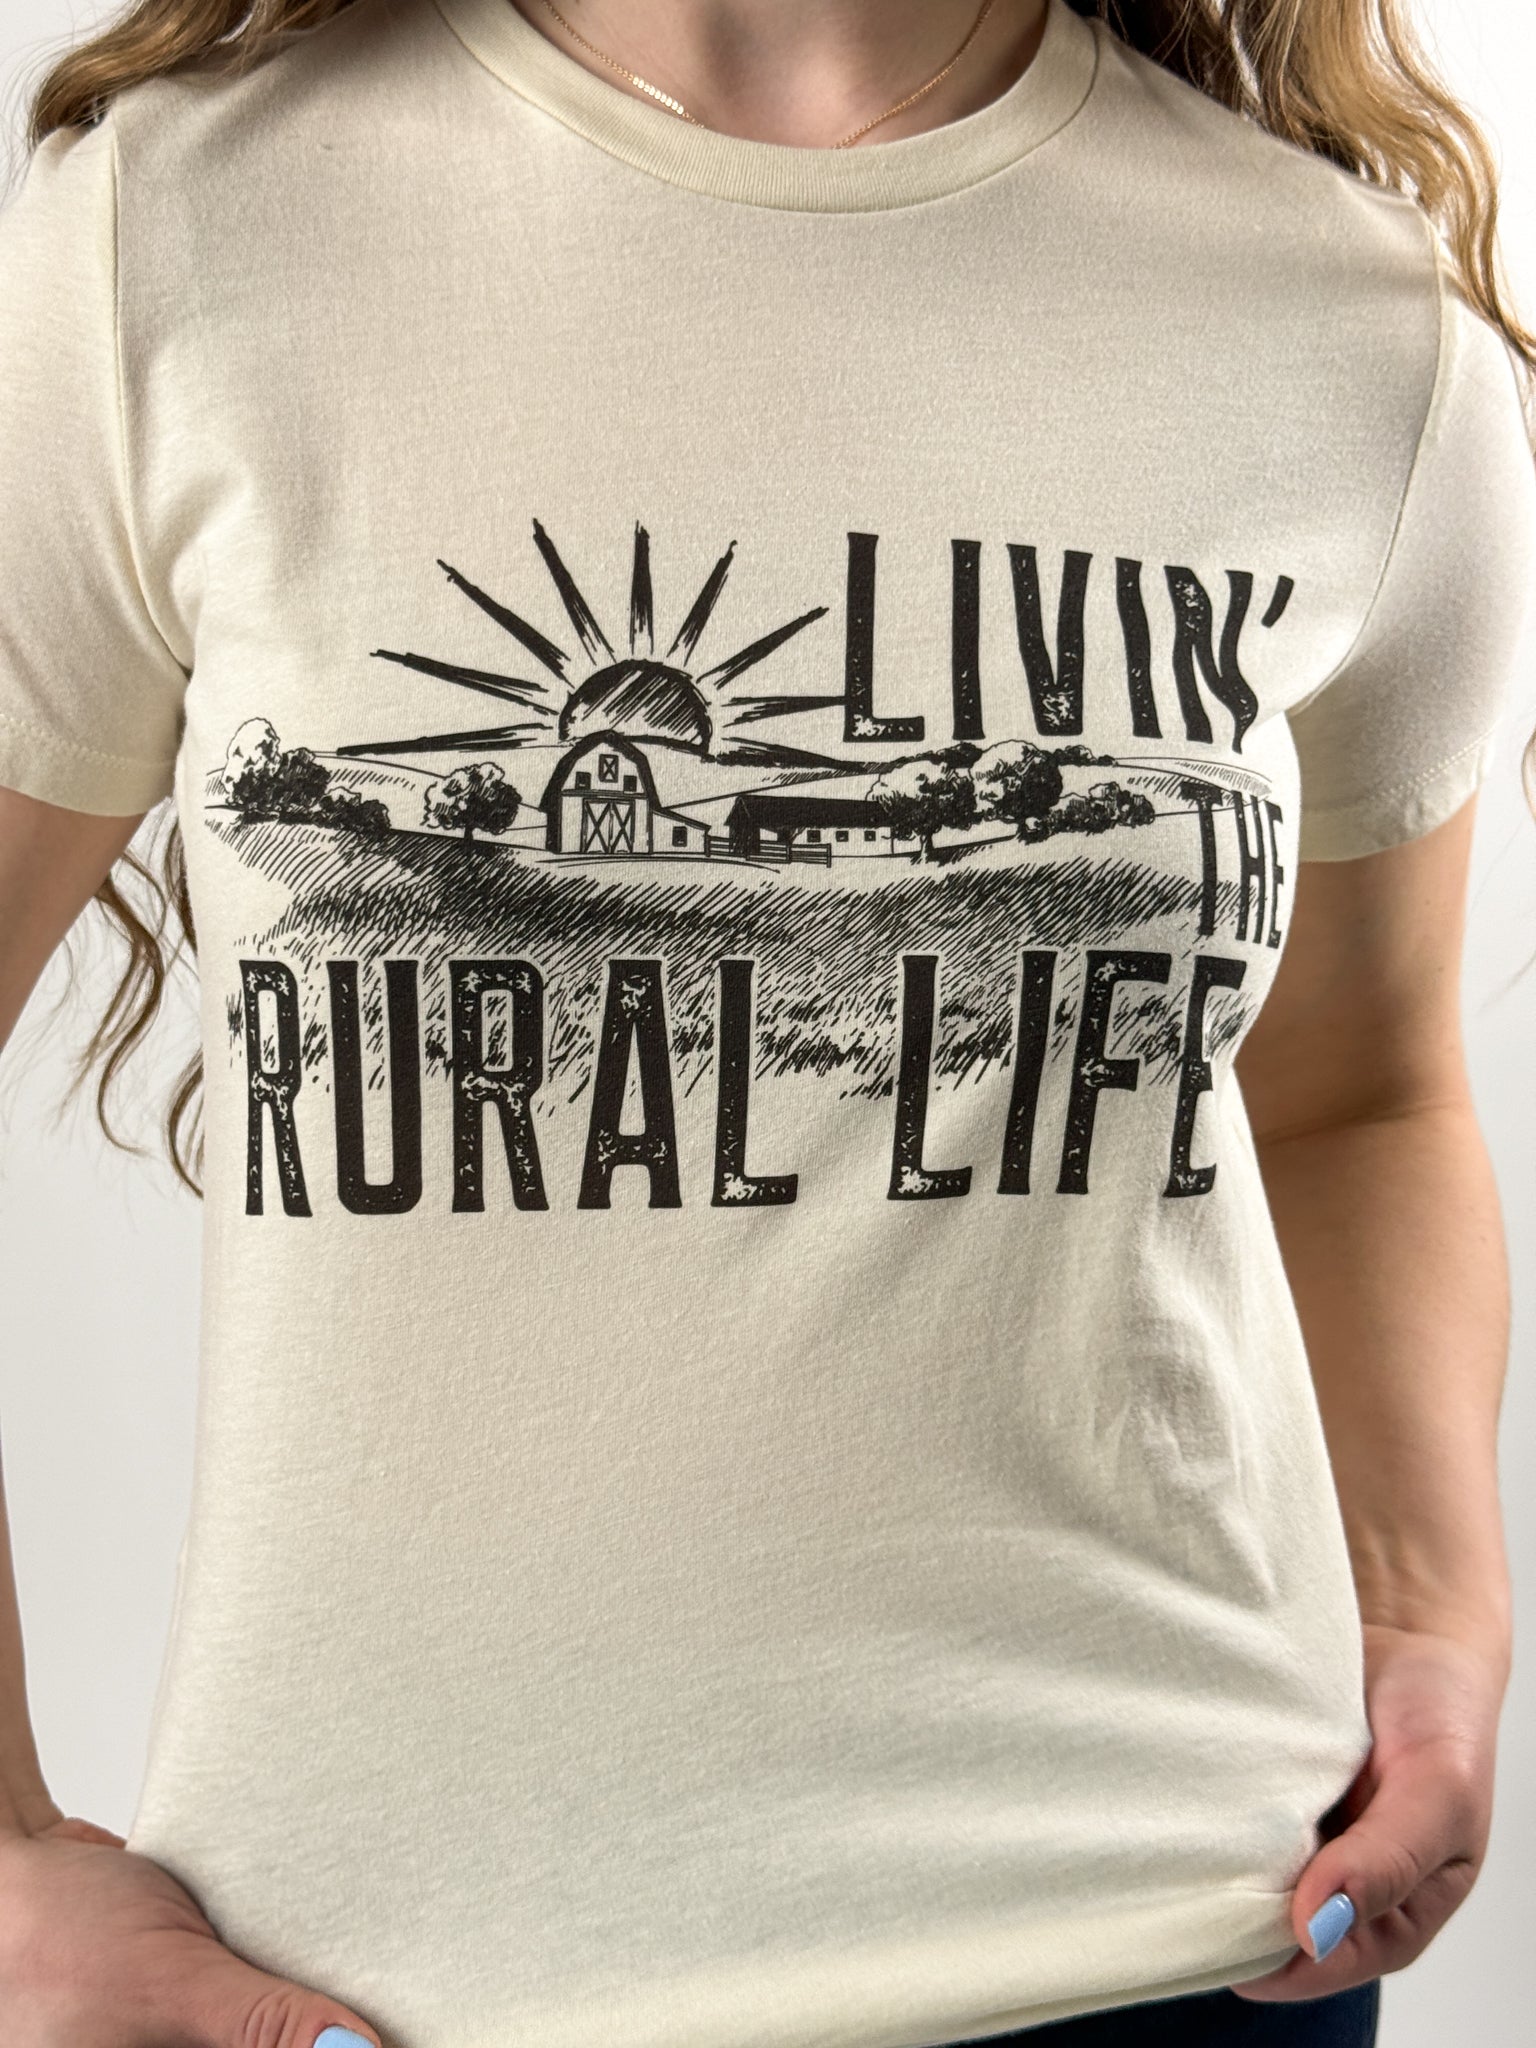 Livin' The Rural Life Tee